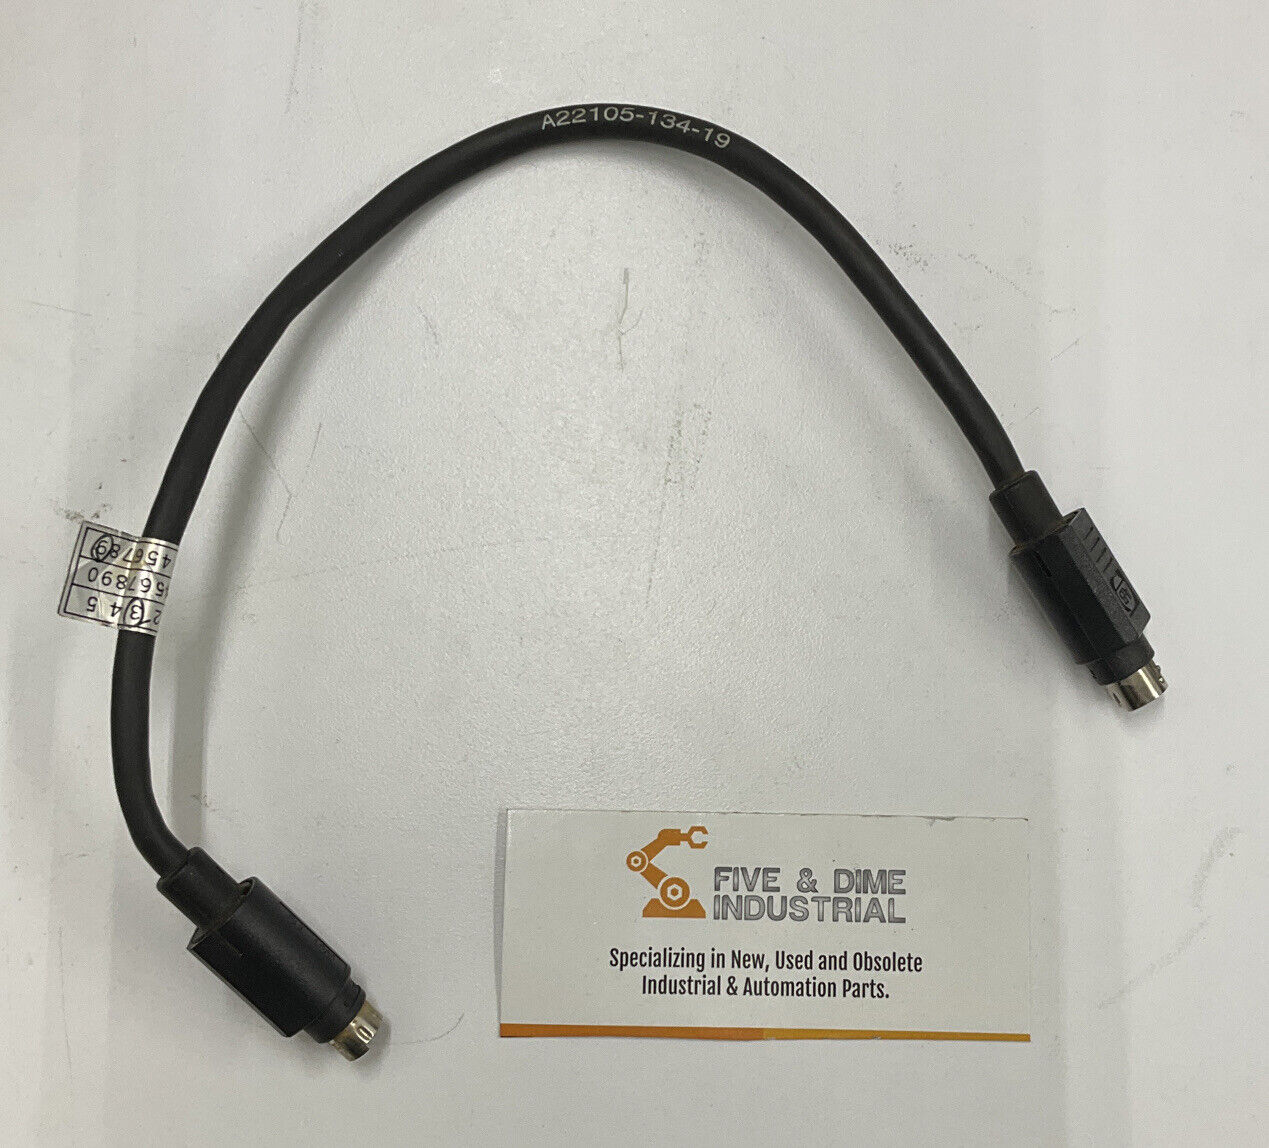 Allen Bradley A22105-134-019 Lot of (3) 8-Pin Communication Cable .33 M (CL273) - 0